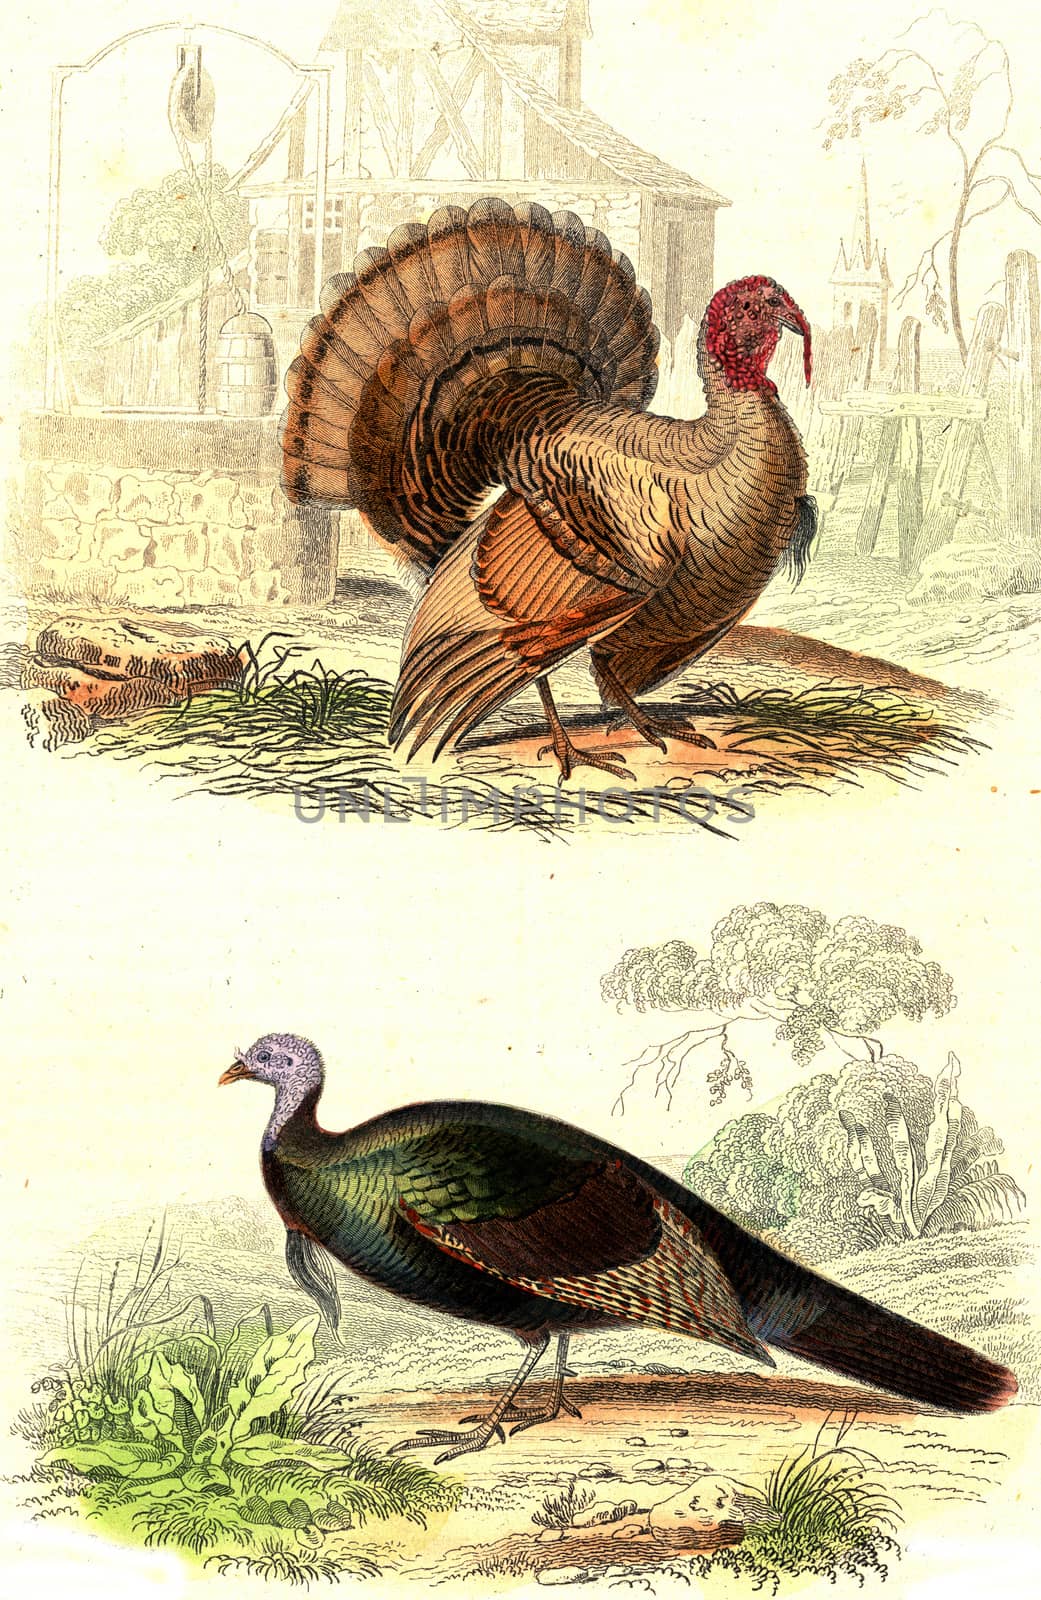 Turkey, Wild turkey, vintage engraving. by Morphart